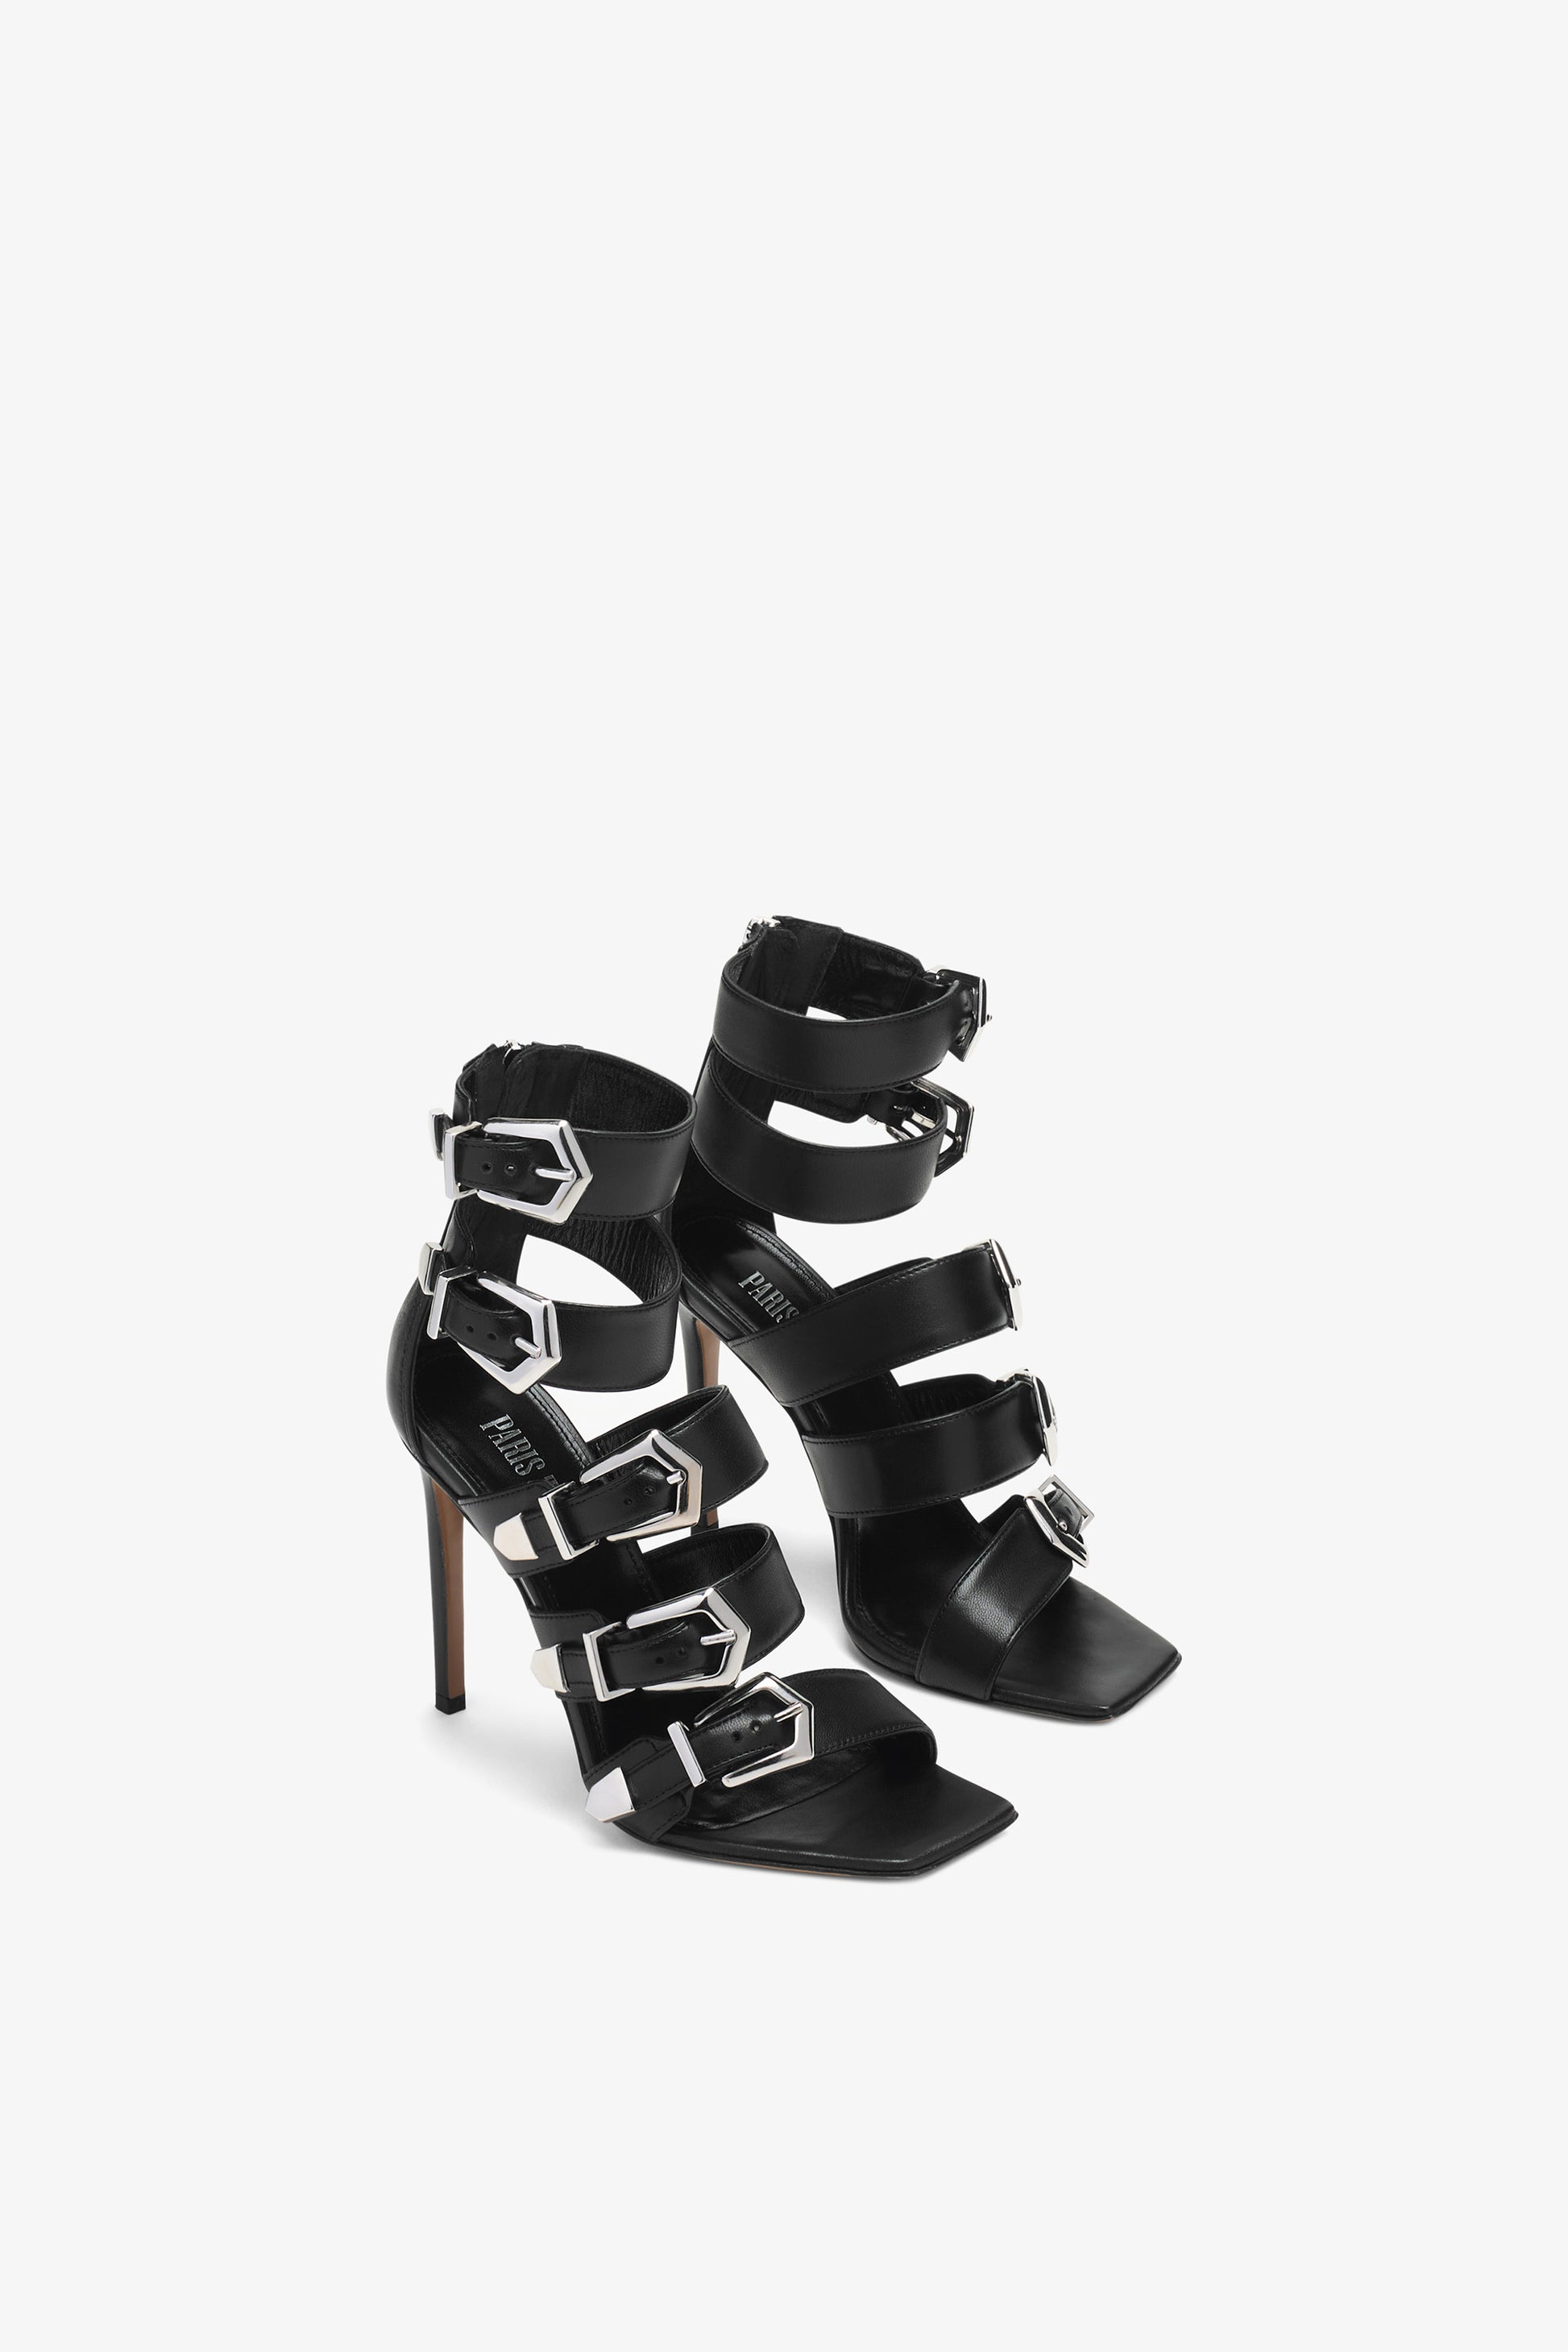 Black leather strappy sandal